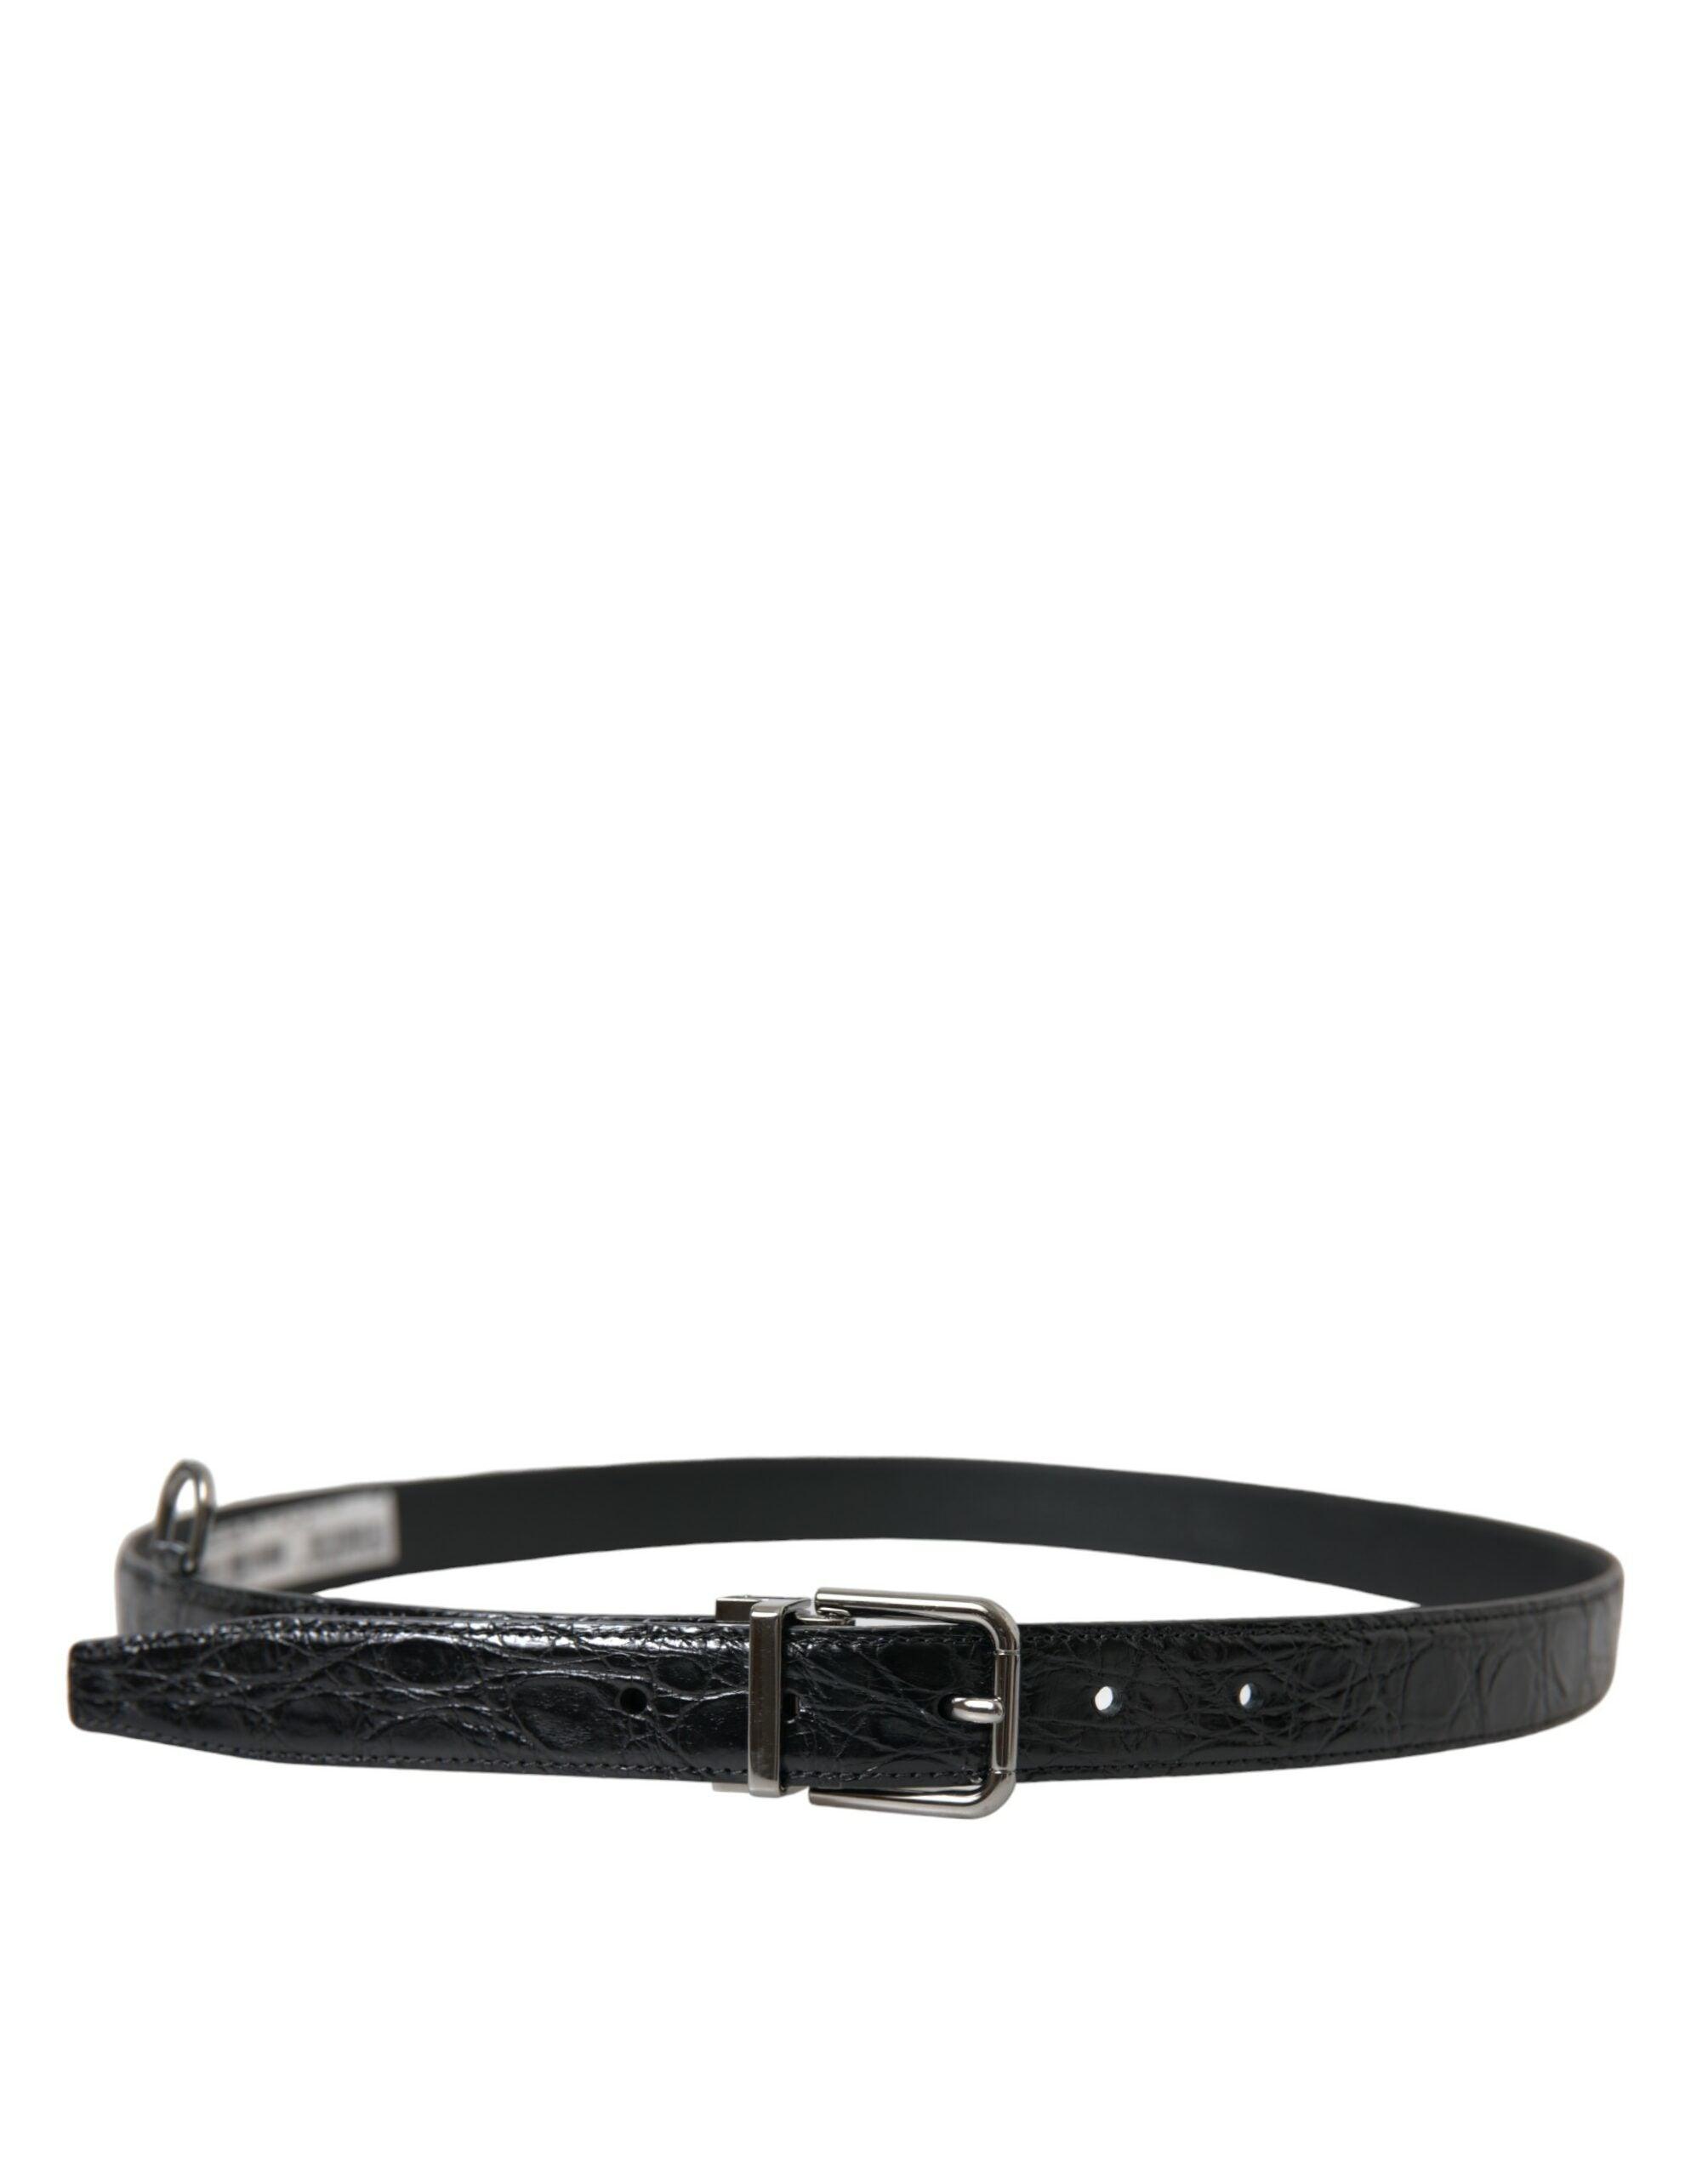 Elegant Black Leather Belt with Metal Buckle - Divitiae Glamour